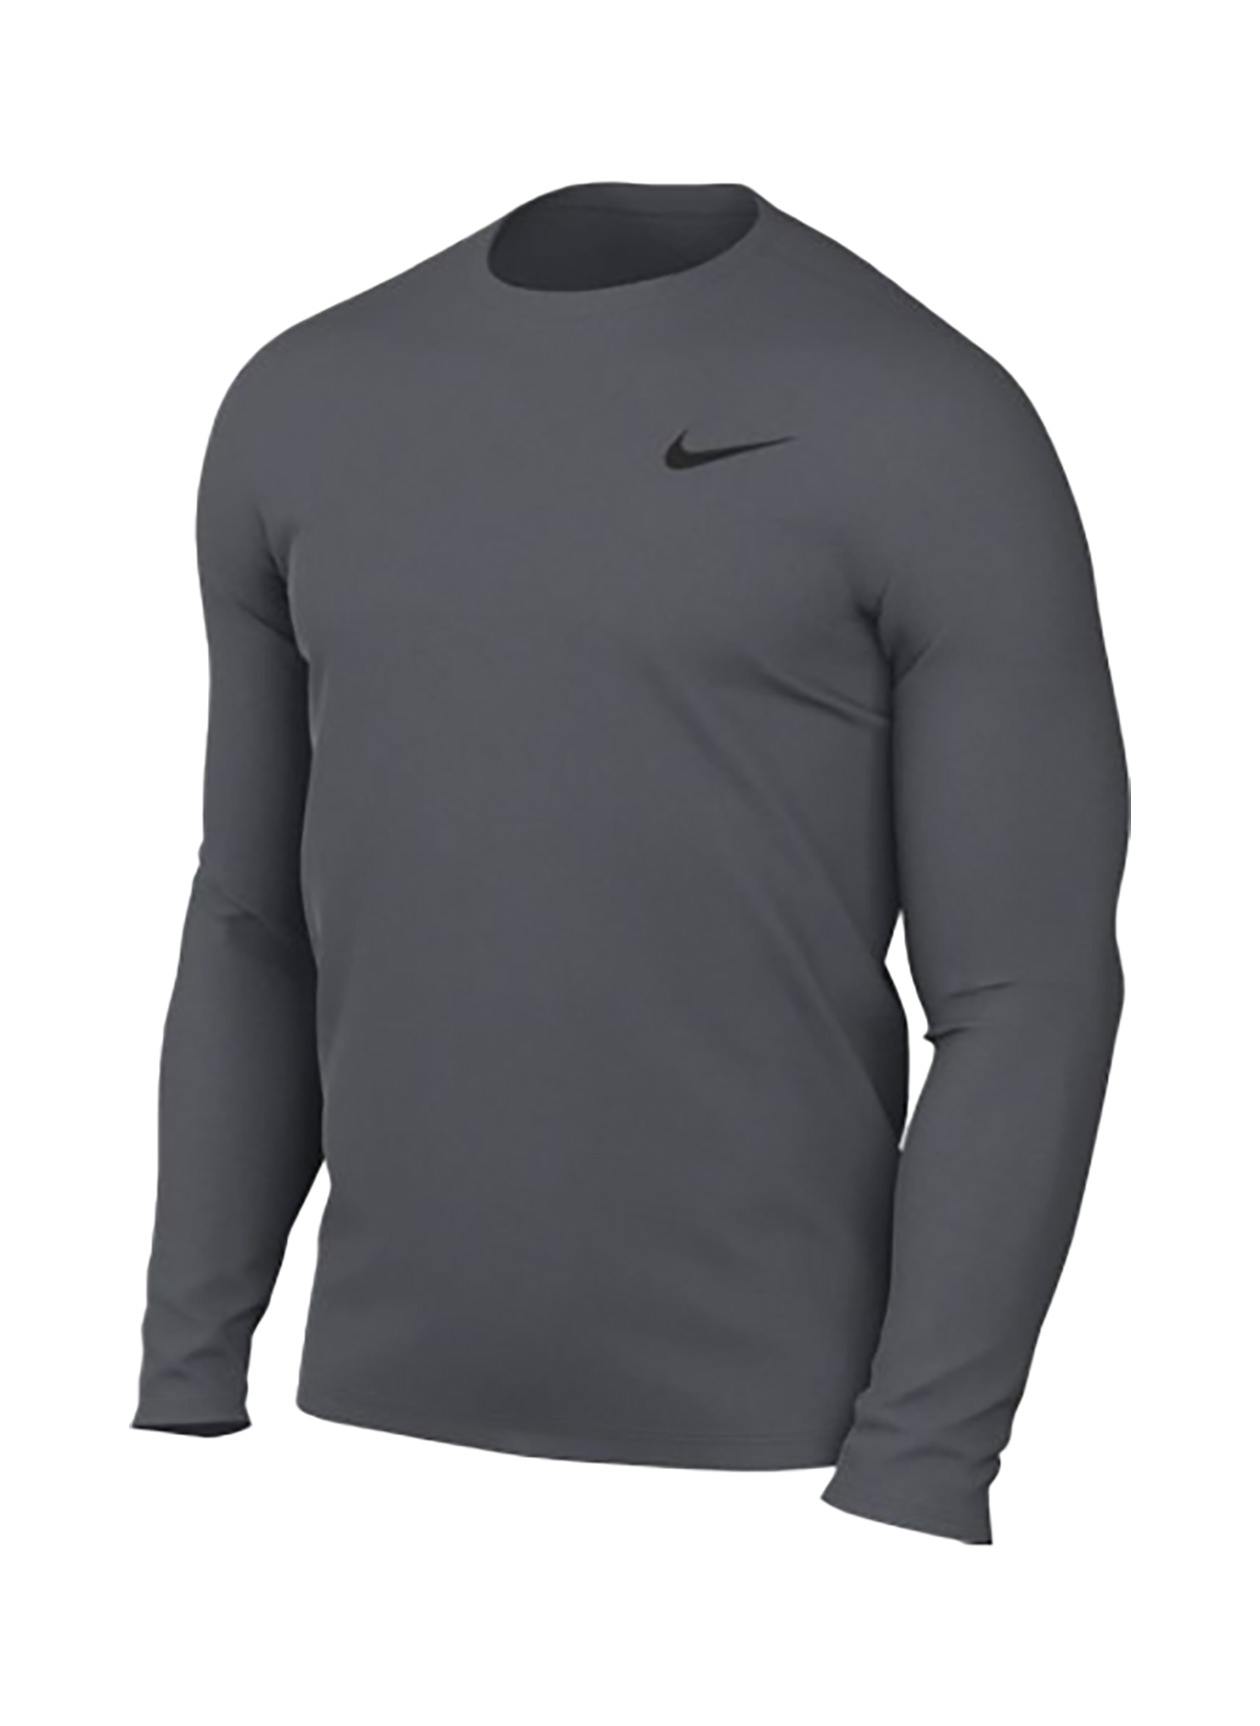 Customized Nike Men's Carbon Heather Legend Long-Sleeve Crew T-Shirt